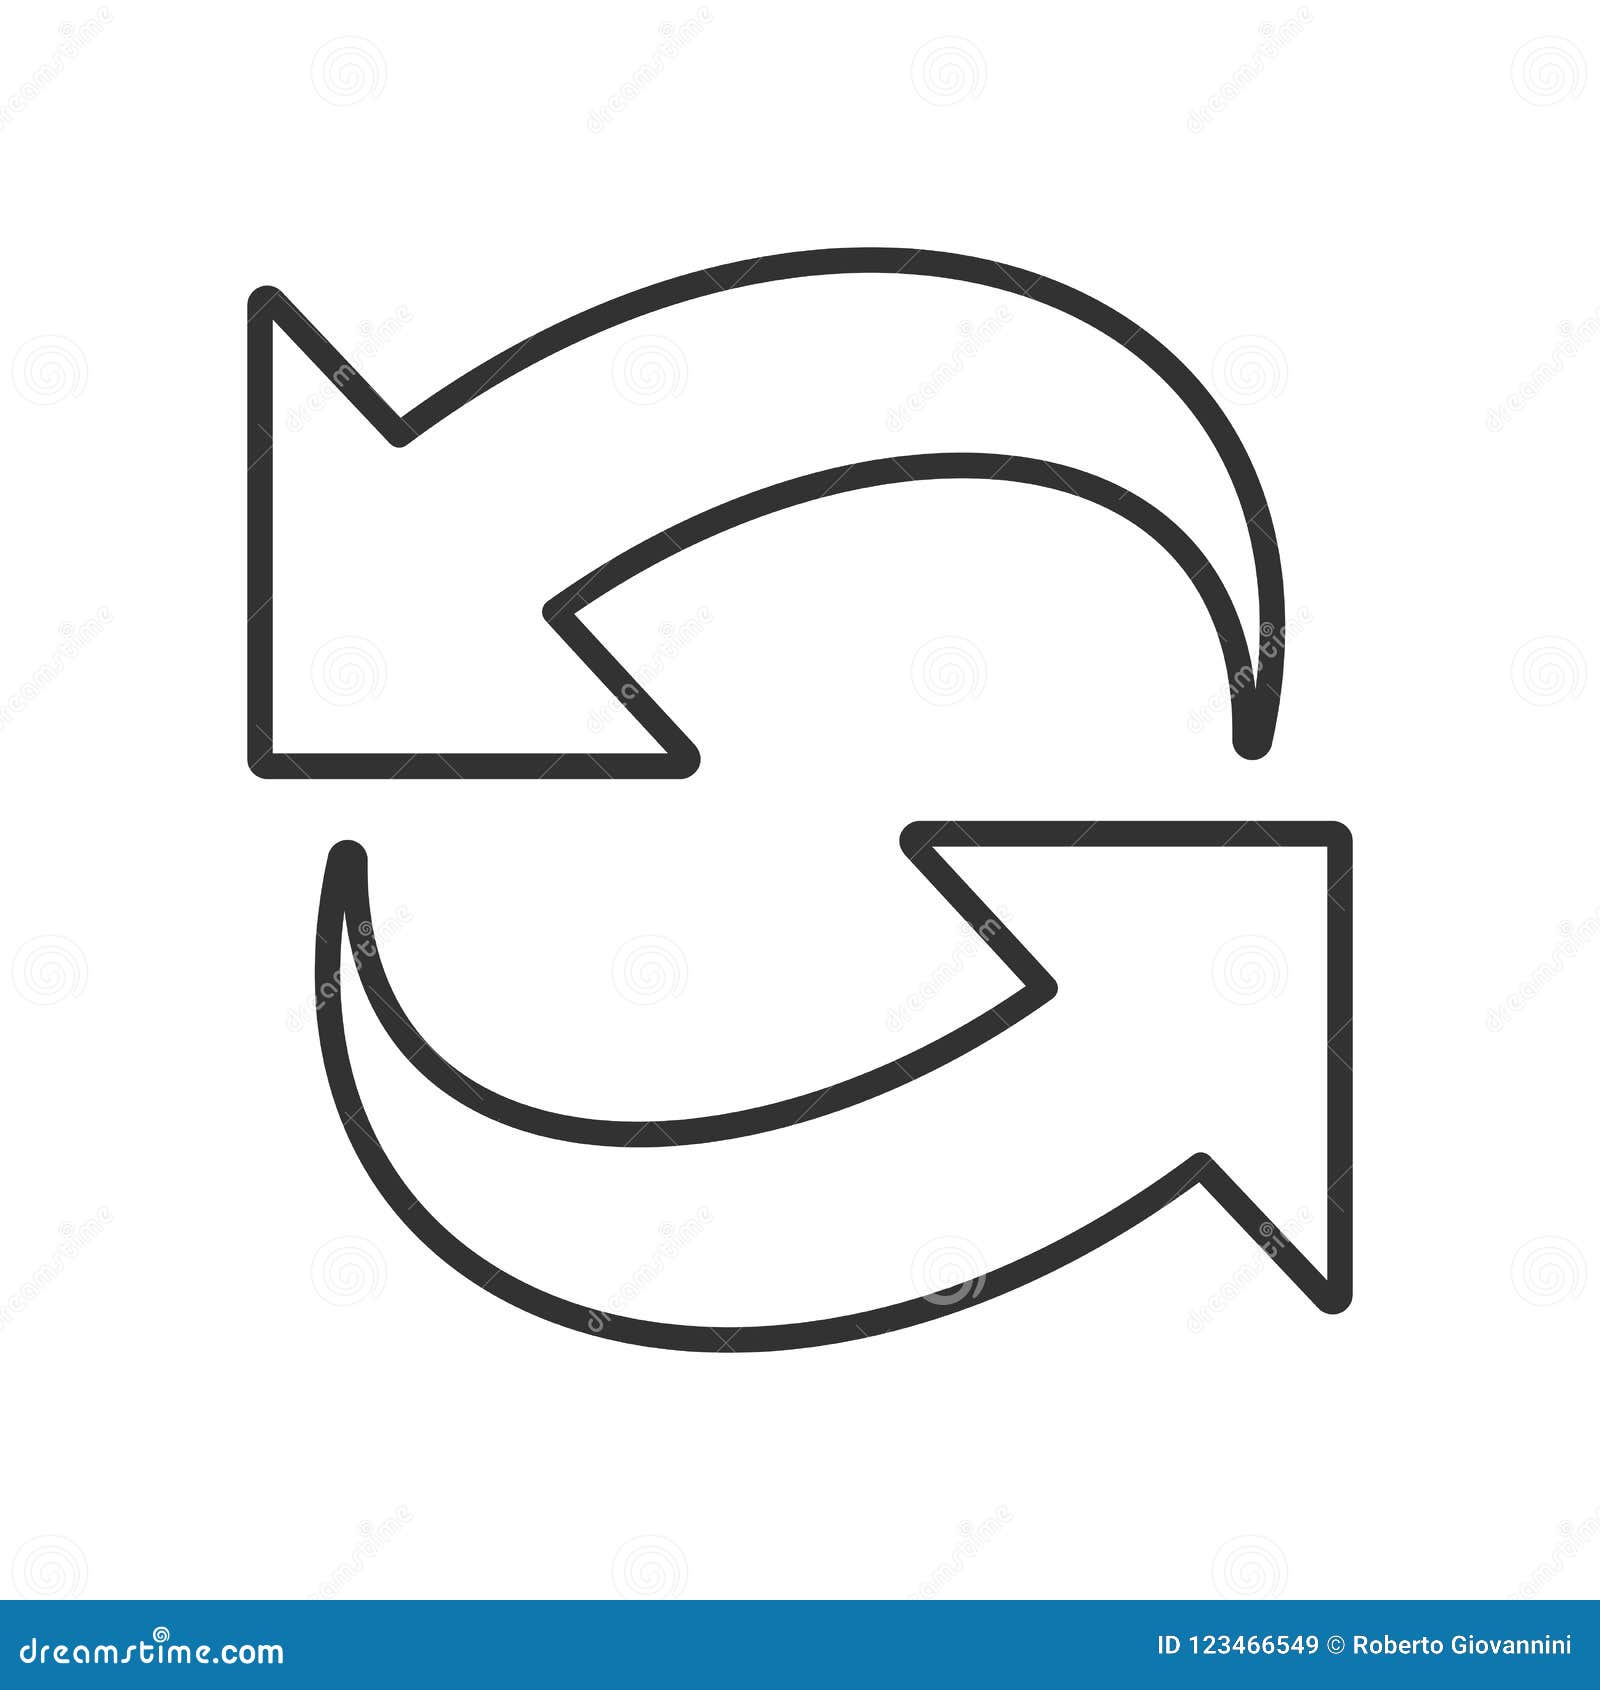 refresh arrows outline flat icon on white